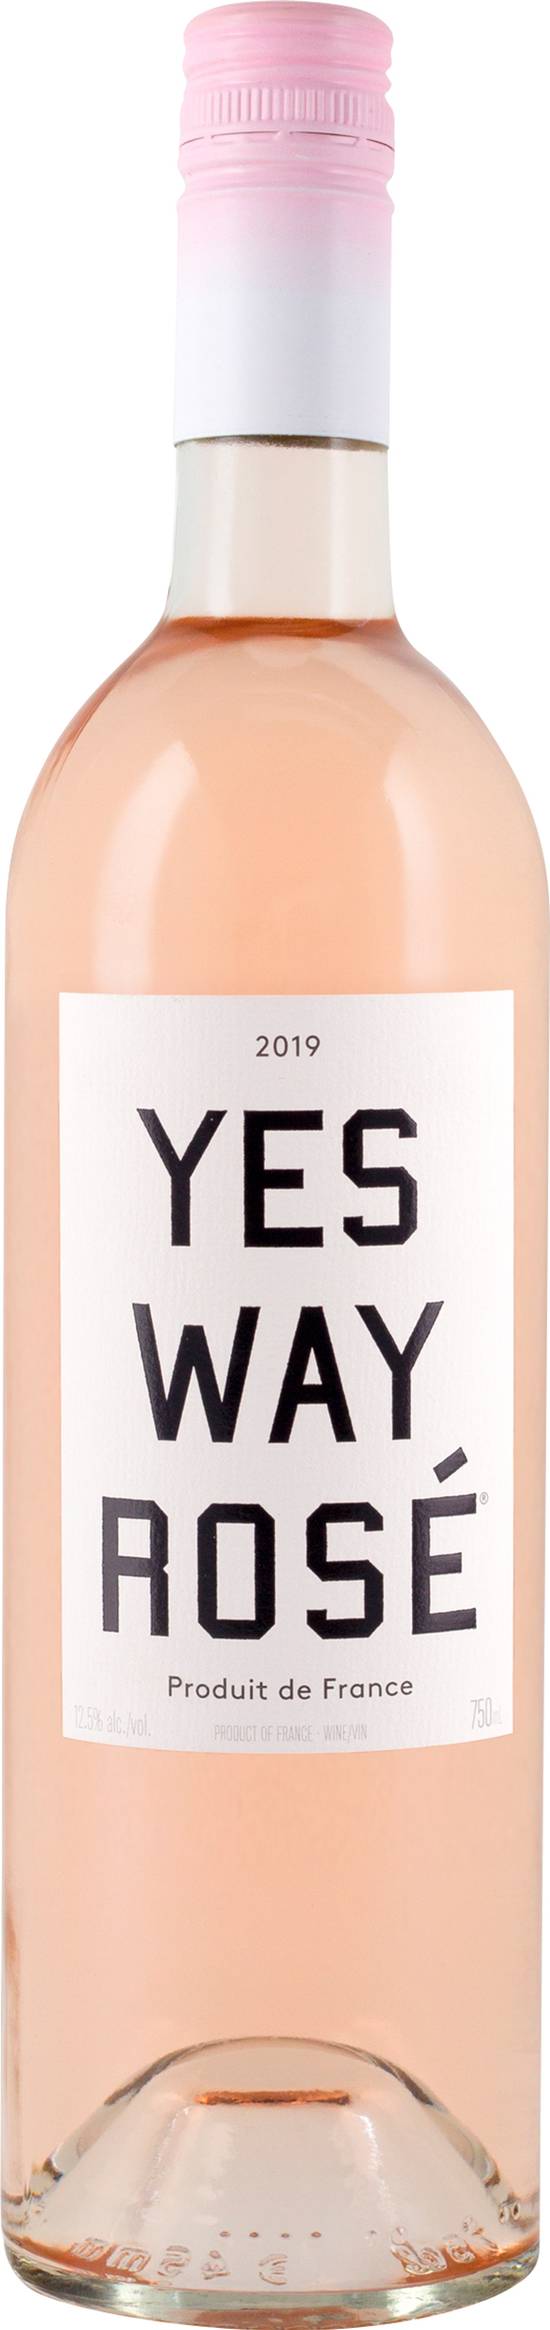 Yes Way Rose Dry Rose Wine 2017 (750 ml)